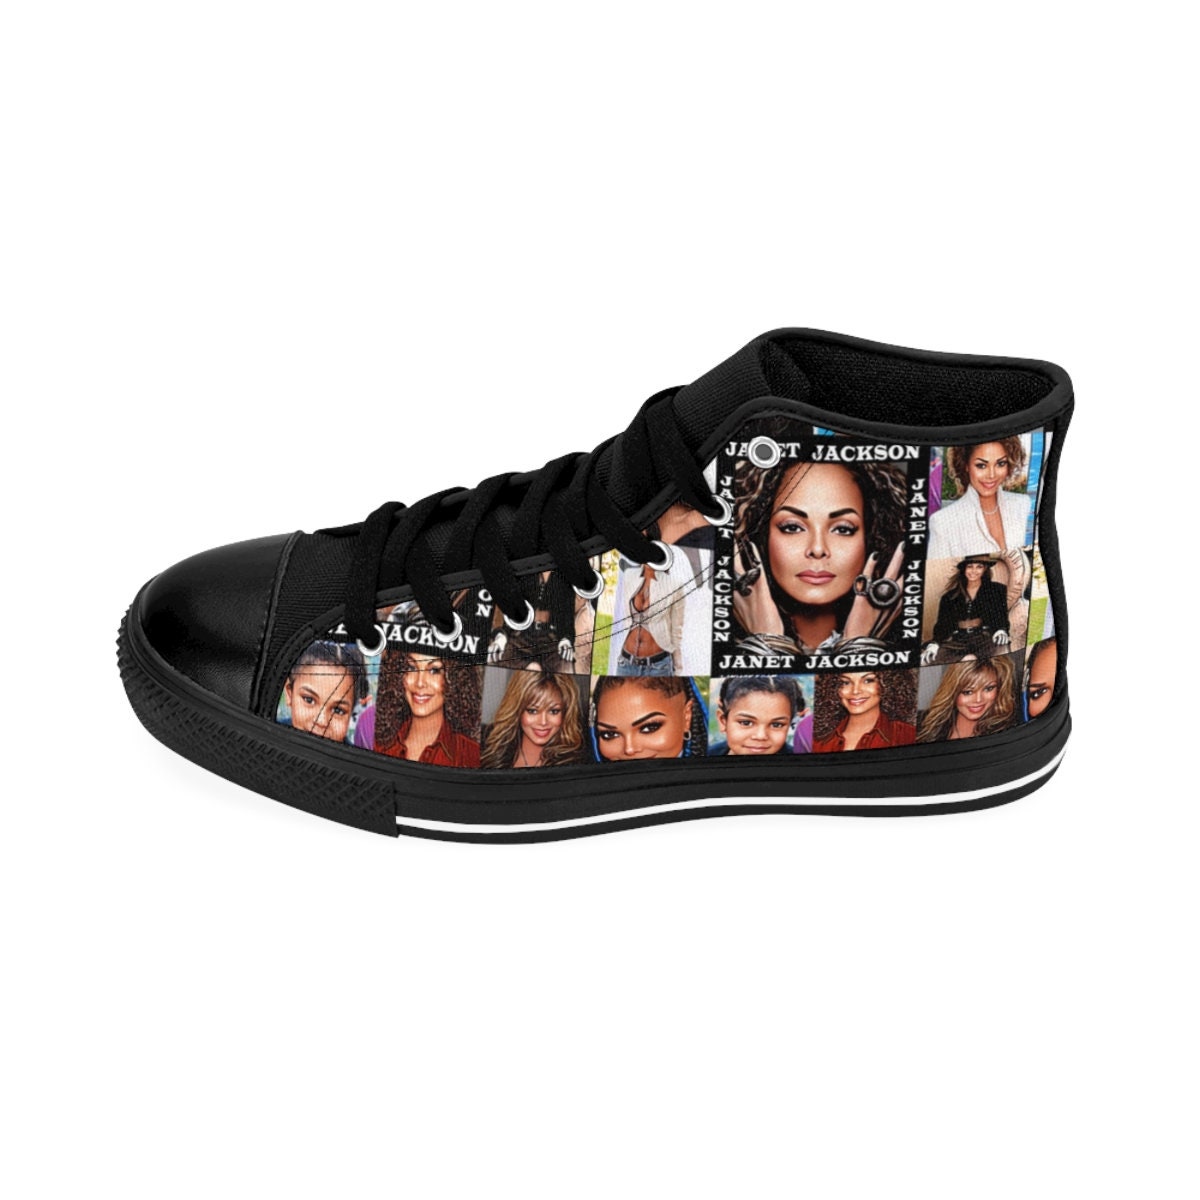 Women's Janet Jackson Classic Sneakers